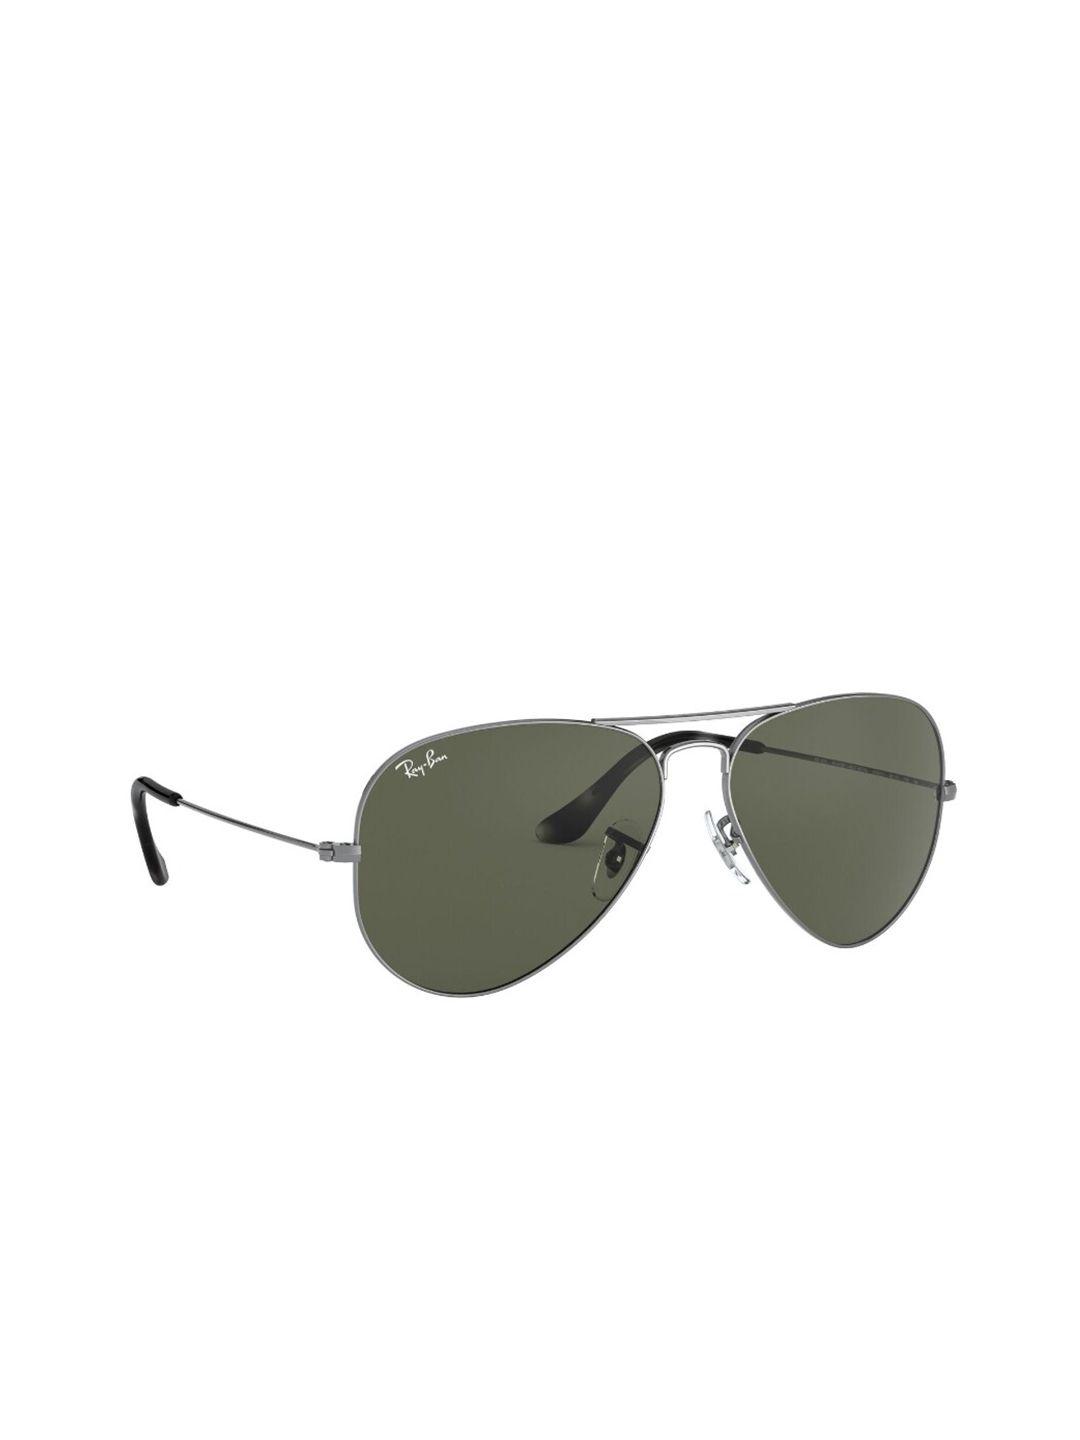 ray-ban unisex green polarized aviator sunglasses 8056597139632